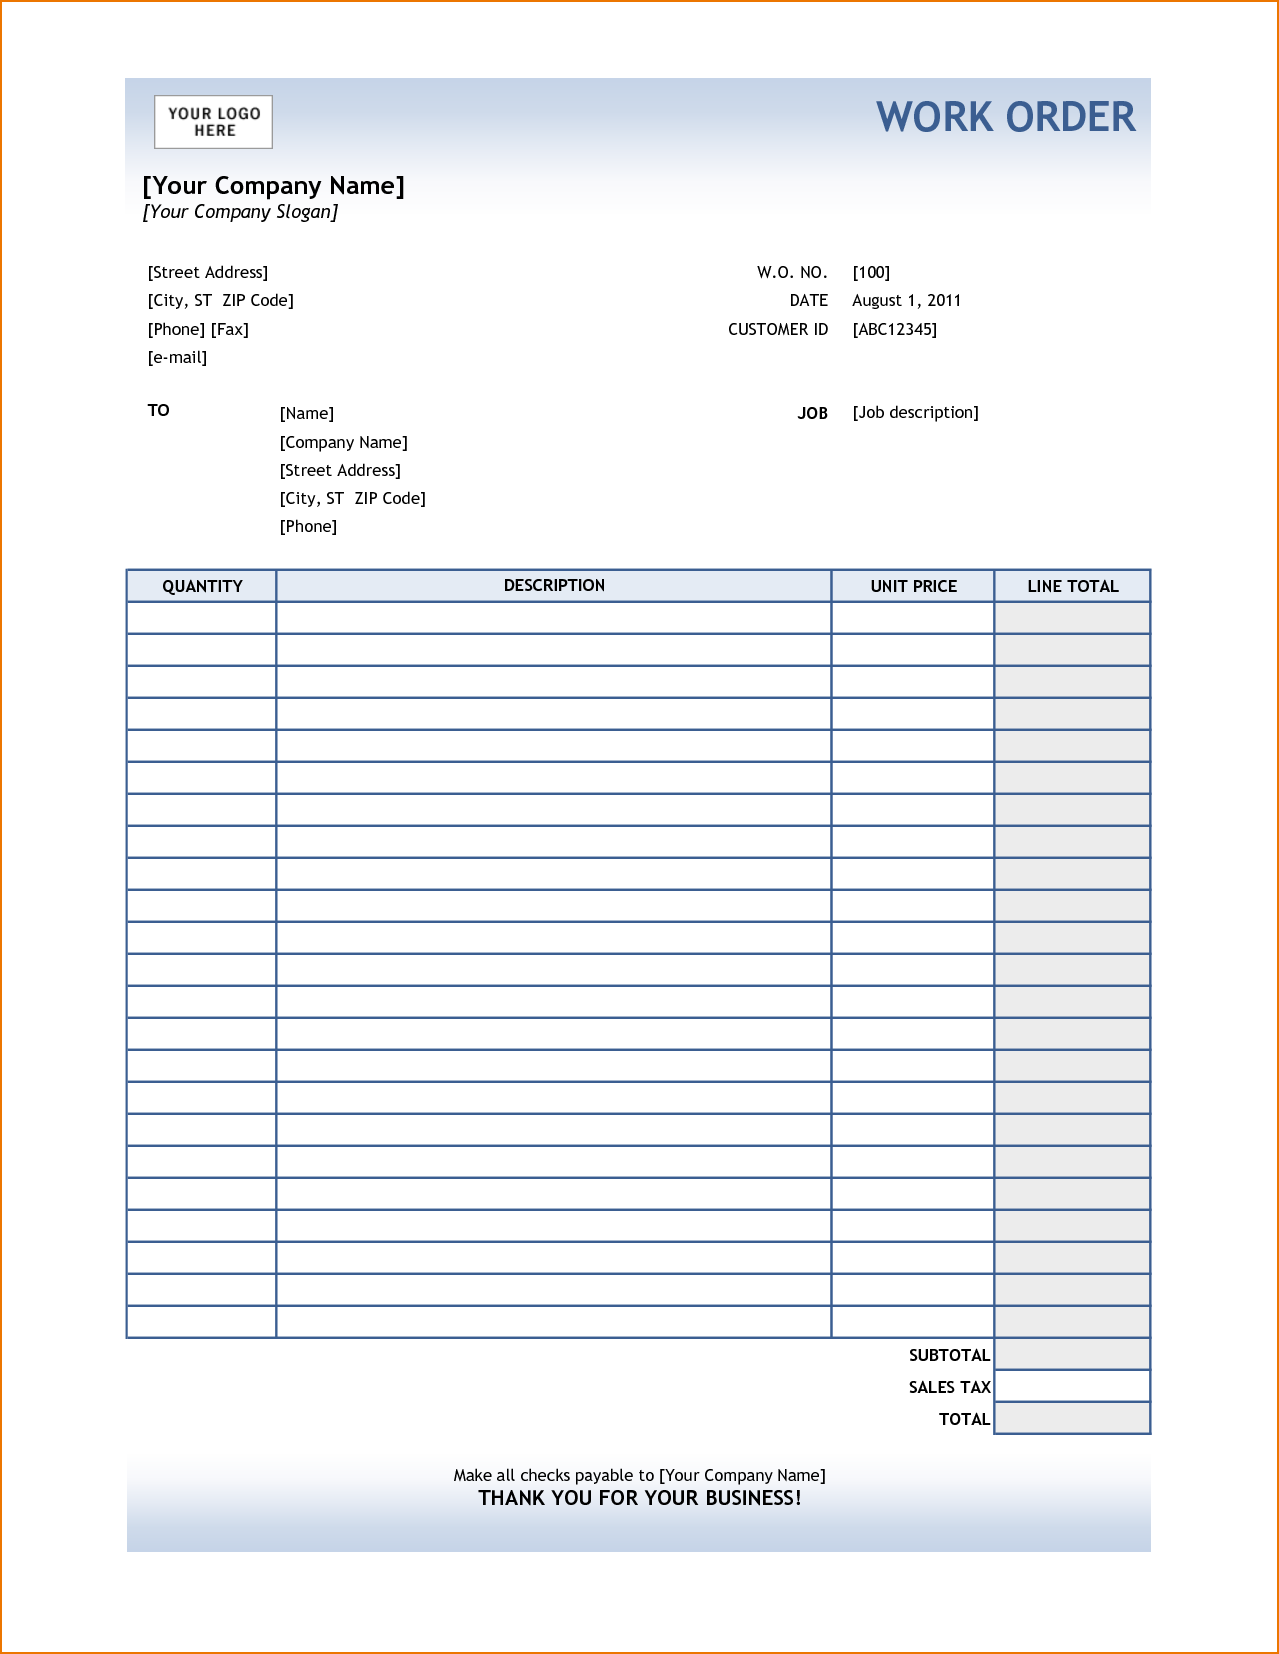 Printable Sales Form Template Excel In Sales Form Template Excel For Personal Use